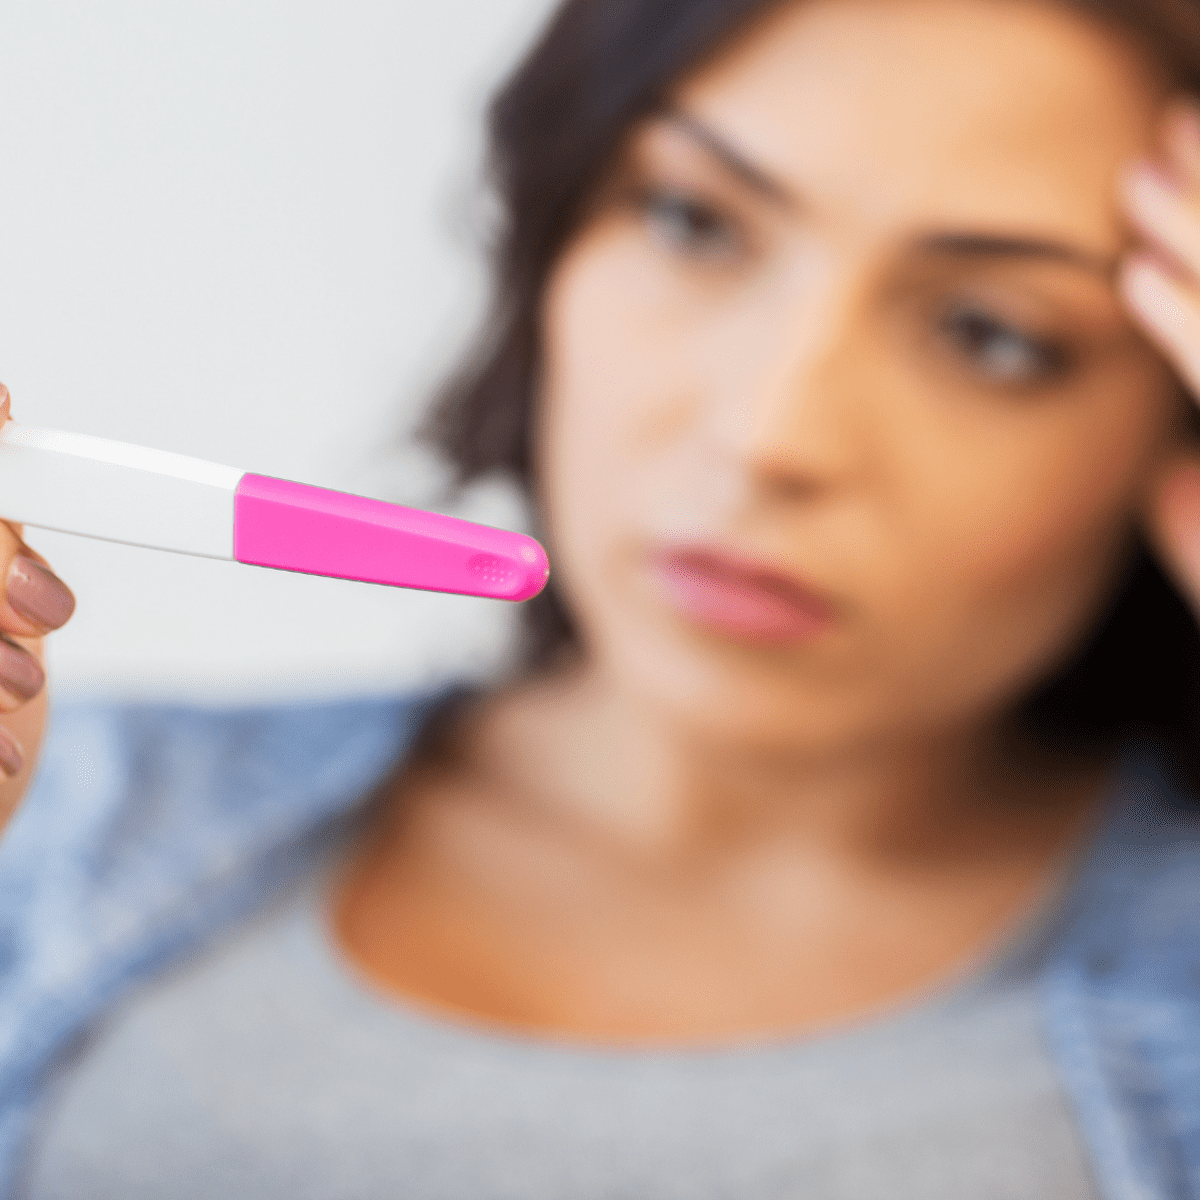 Unprotected Sex Can I Get Pregnant?